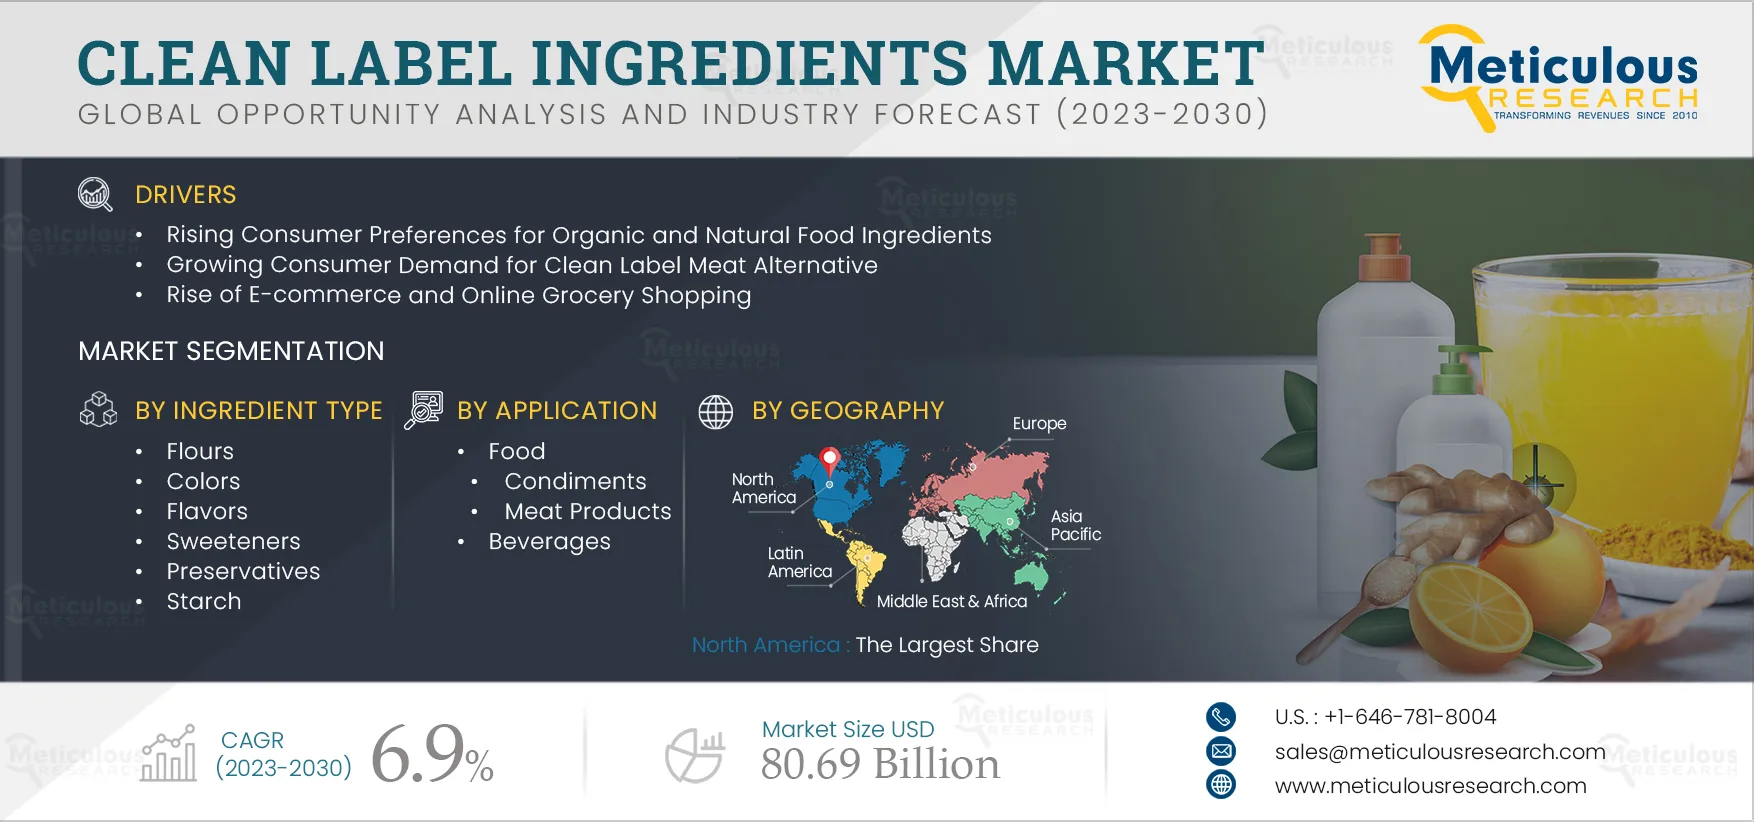 Clean Label Ingredients Market